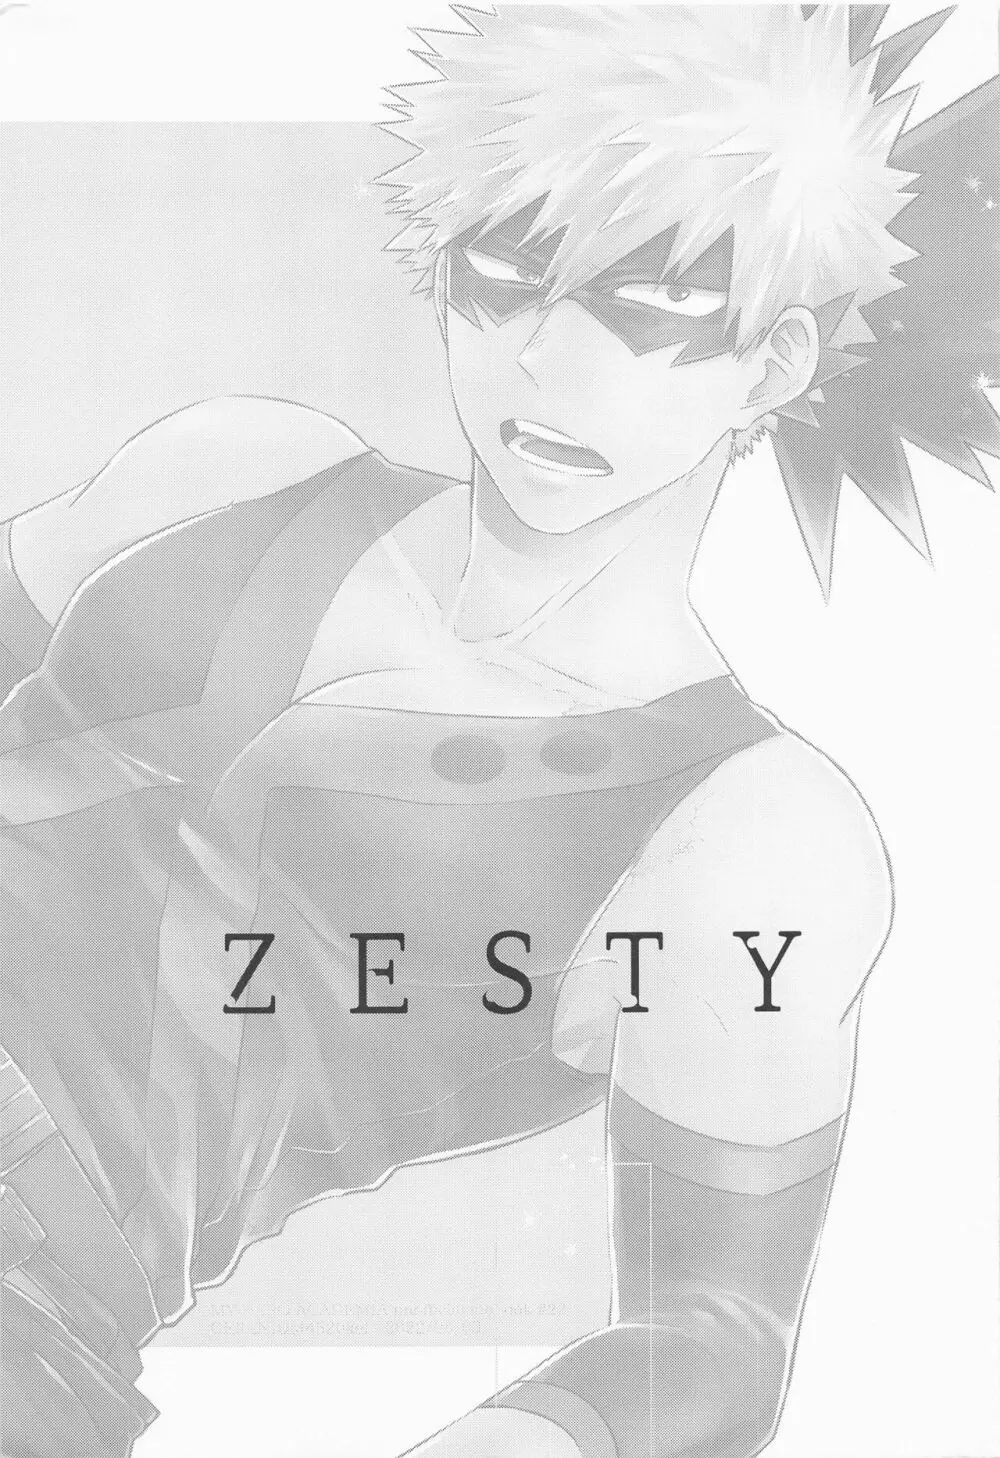 ZESTY - page2